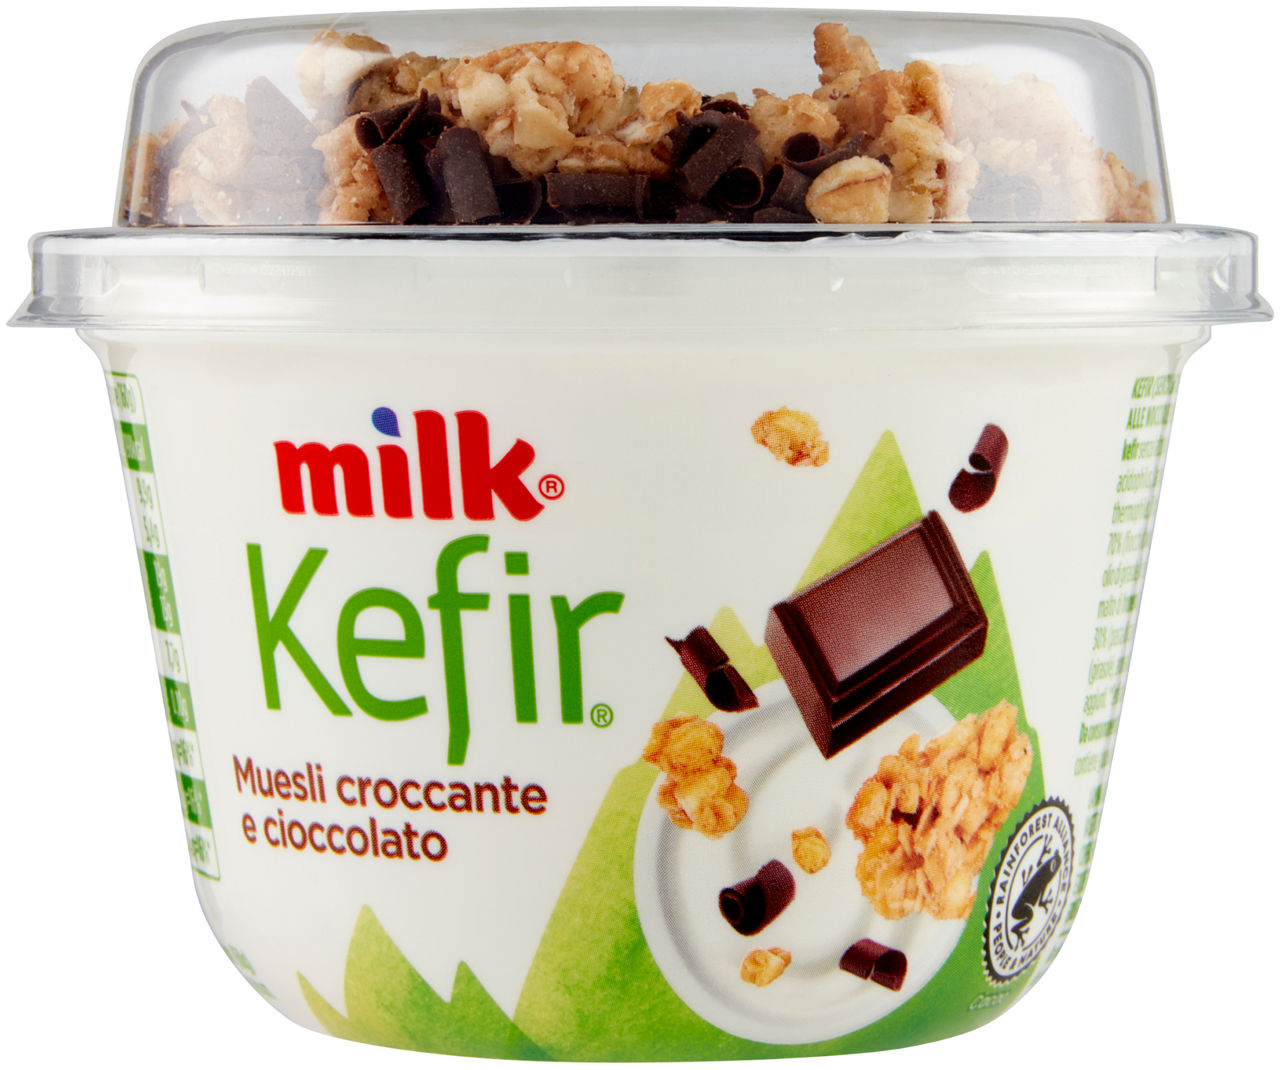 Milk kefir mix muesli croccante e cioccolato g 160